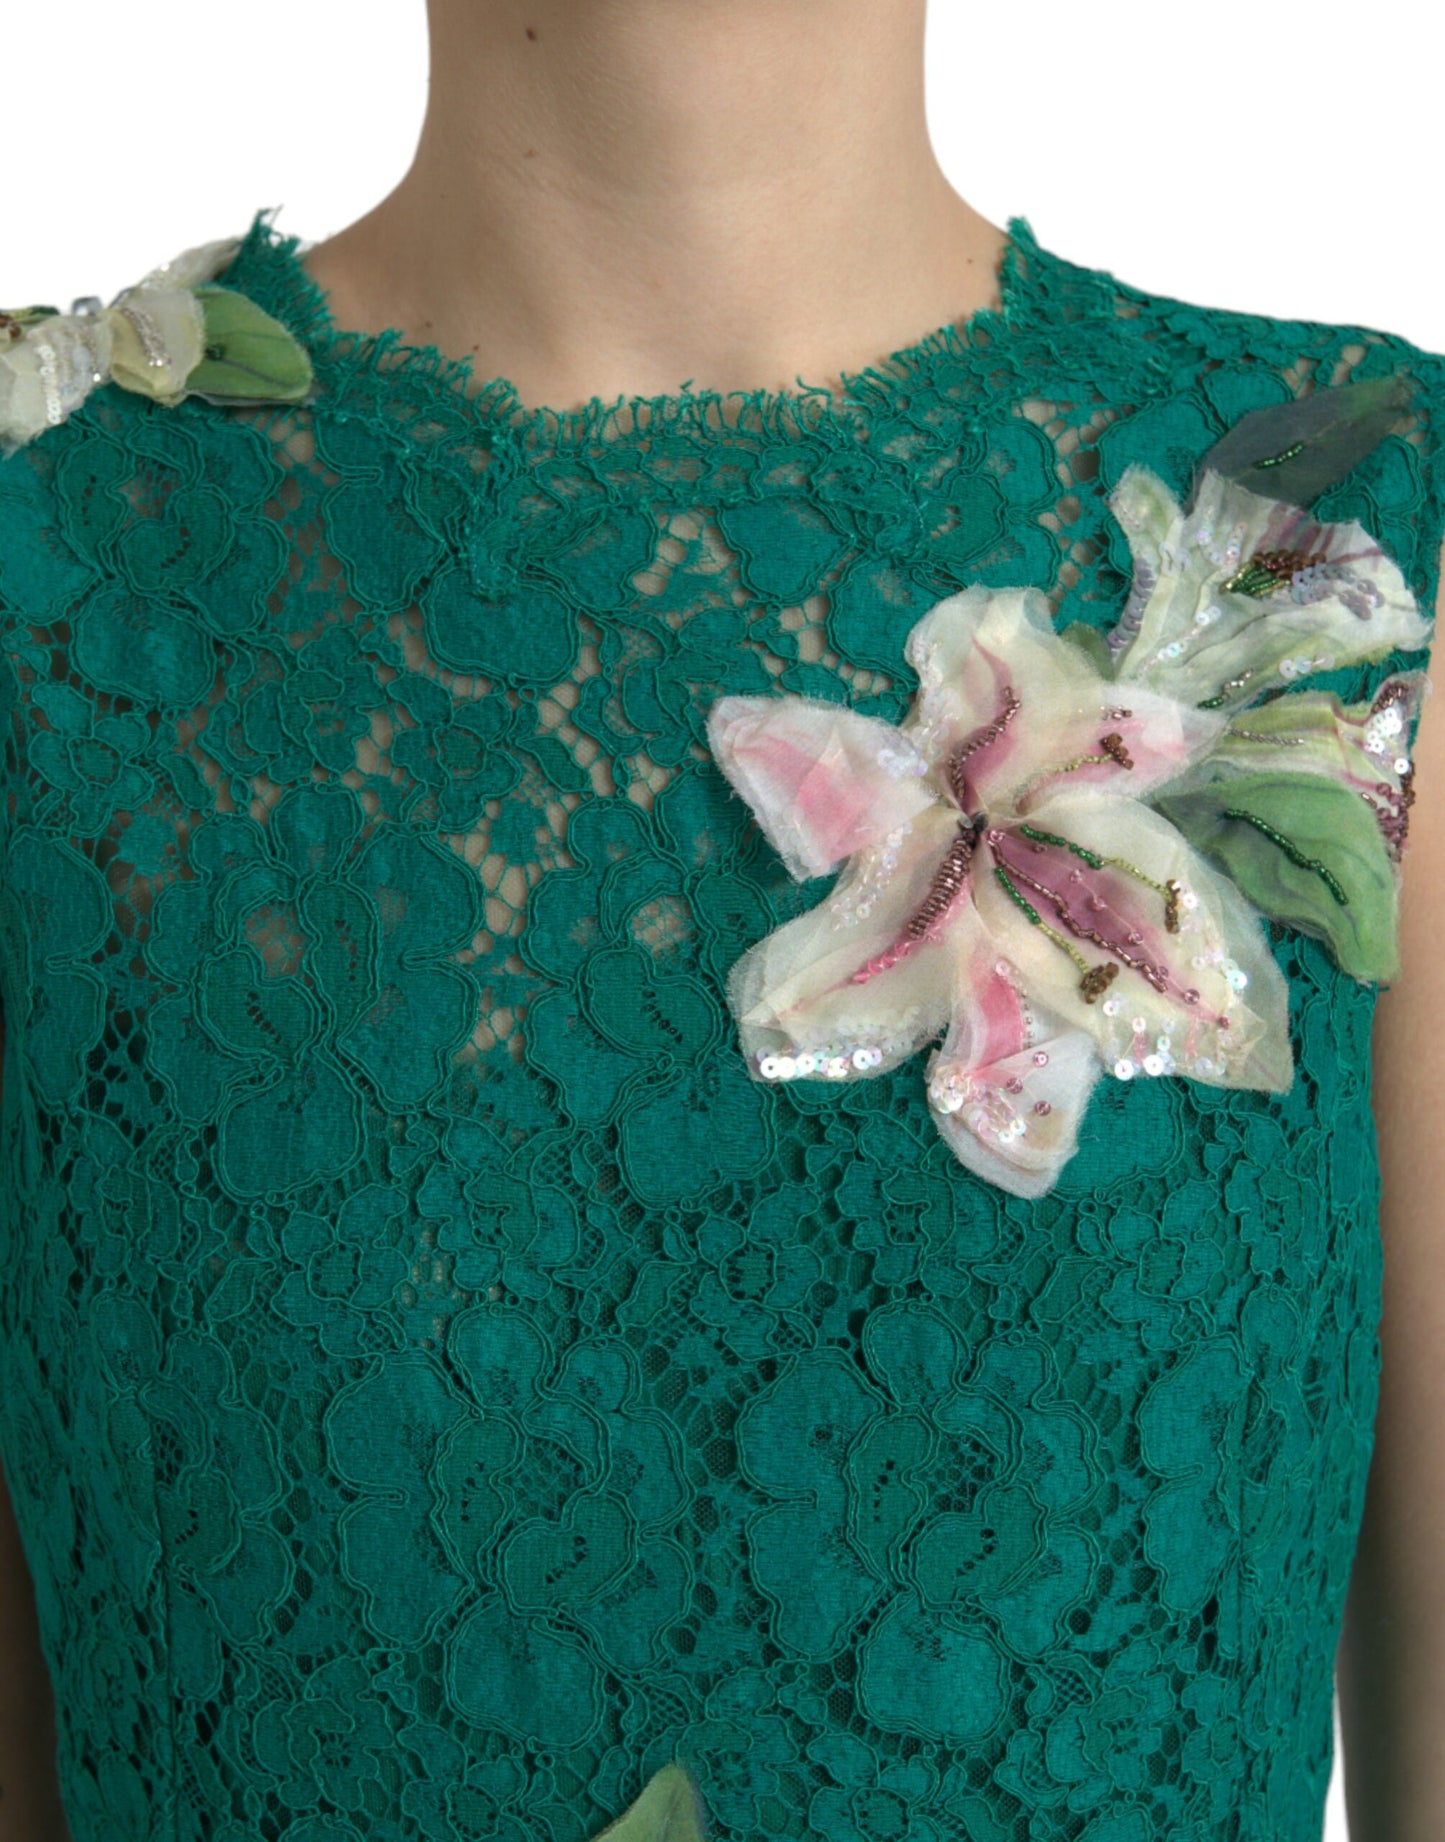 Elegant Lace Midi Dress with Floral Appliques